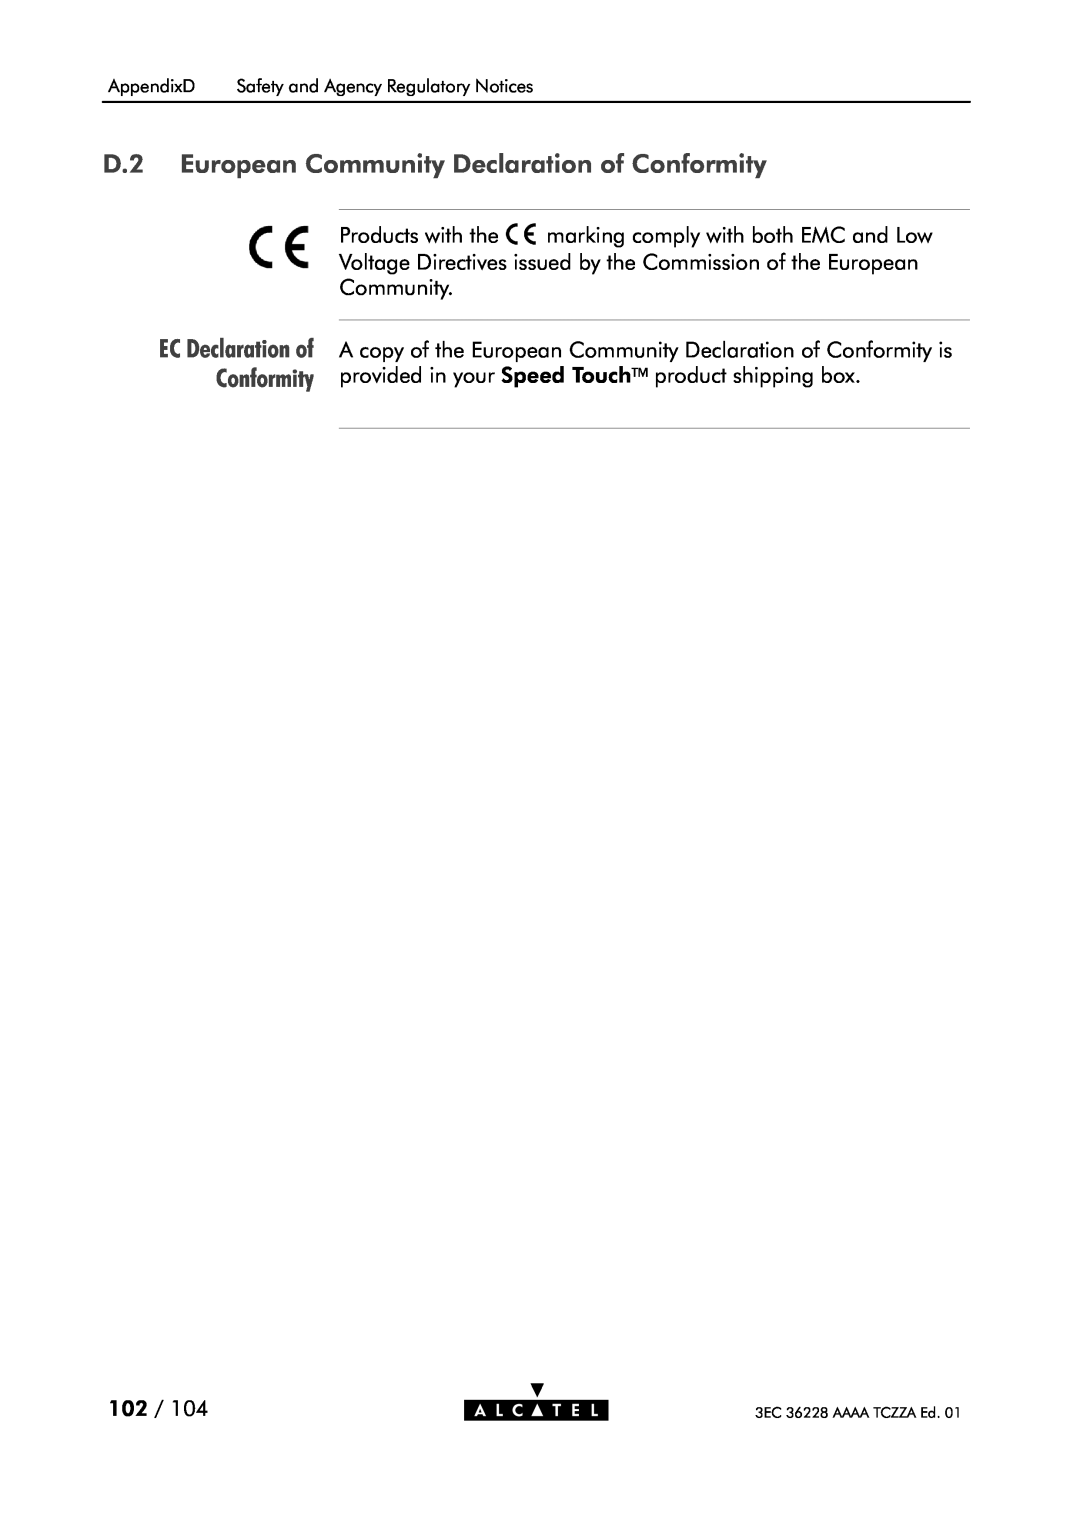 Alcatel Carrier Internetworking Solutions 350I manual D.2 European Community Declaration of Conformity 